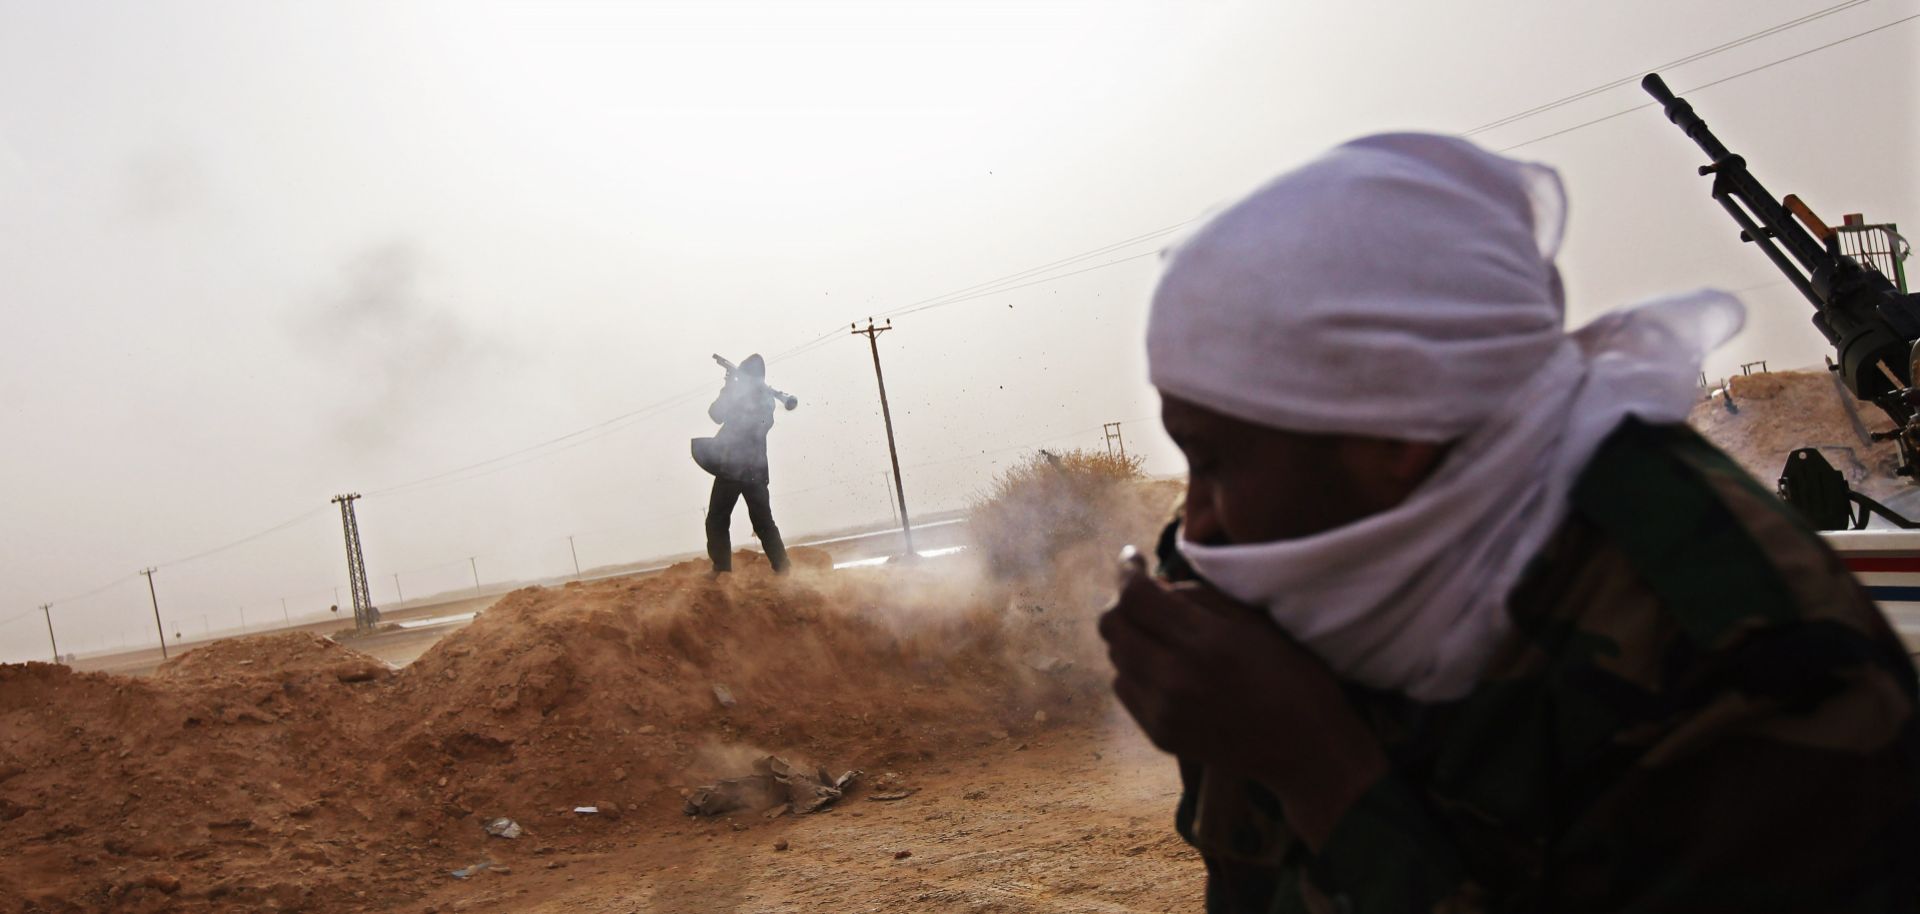  A tribal rebel fires a rocket propelled grenade from a militia post on February 27, 2011 in Ajdabiya, Libya.